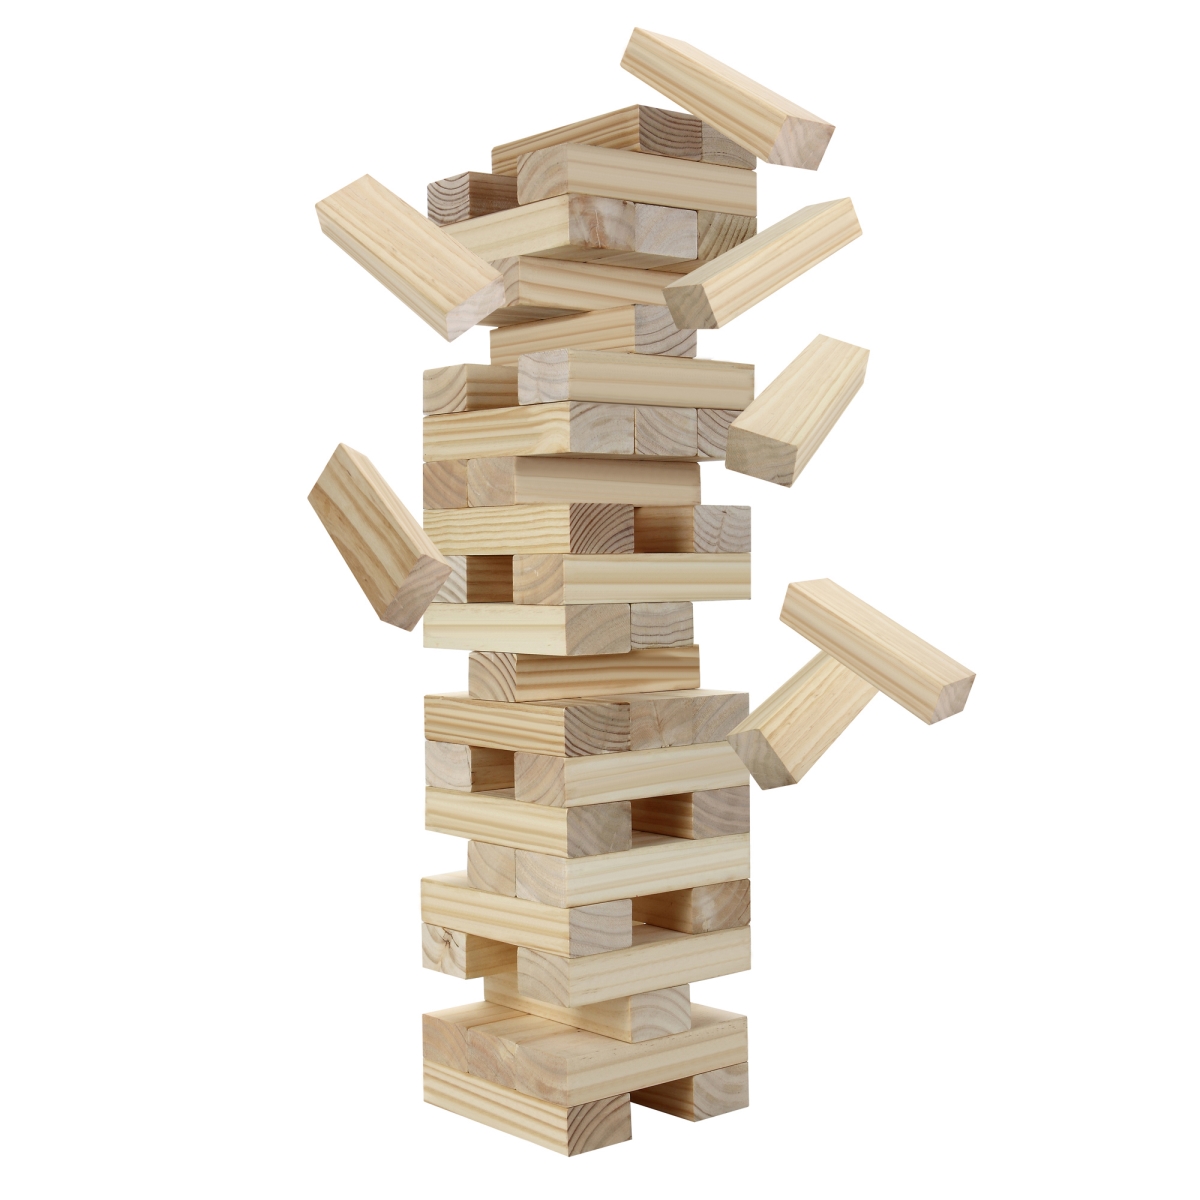 Bg3151 Block Out Wood Toppling Tower Stacking, Collapsing Game W Bag, Pine